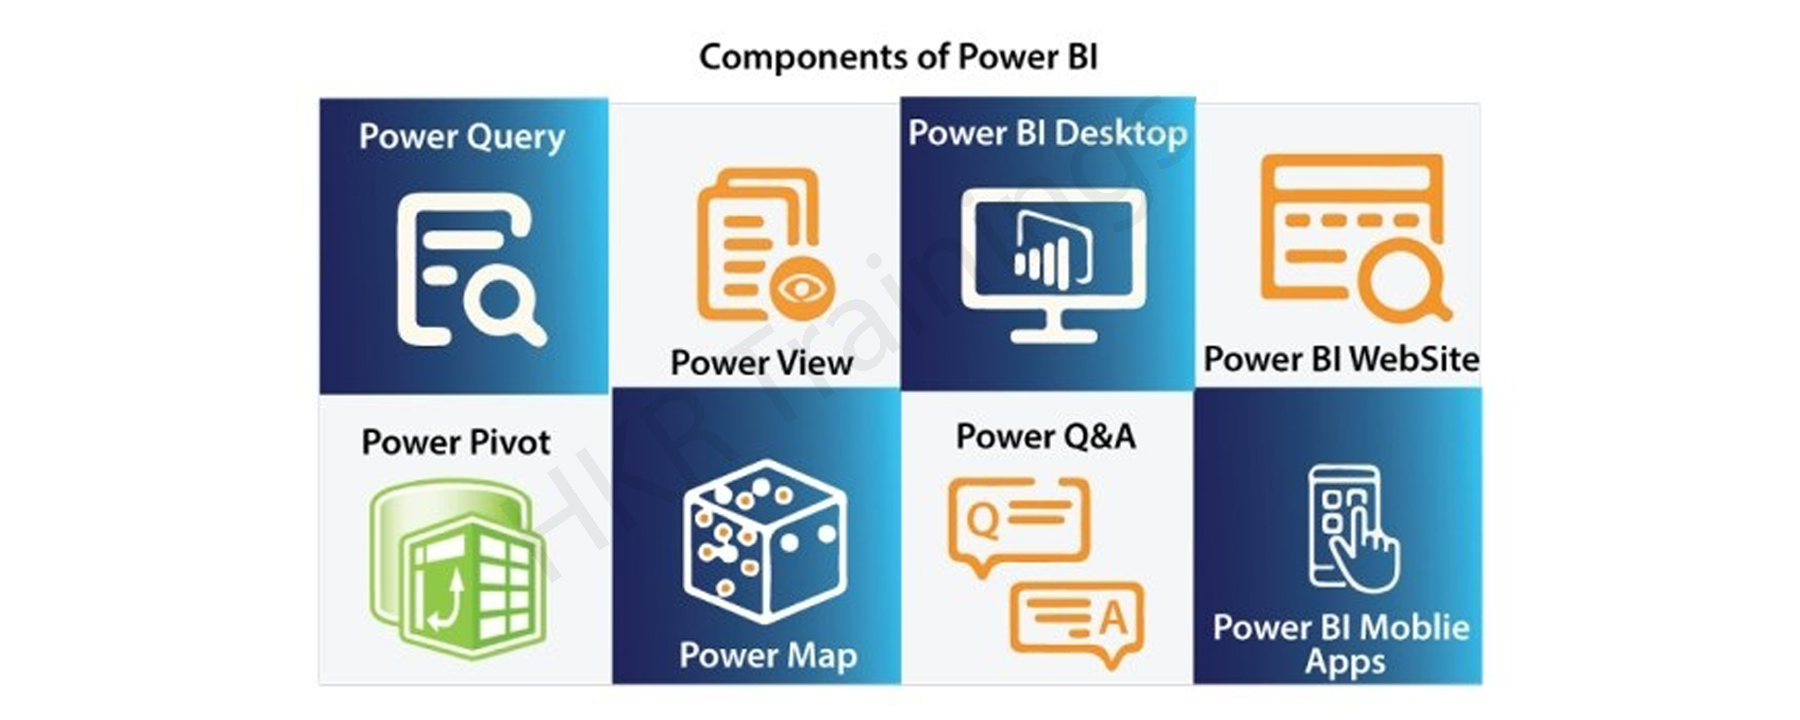 Power BI Components